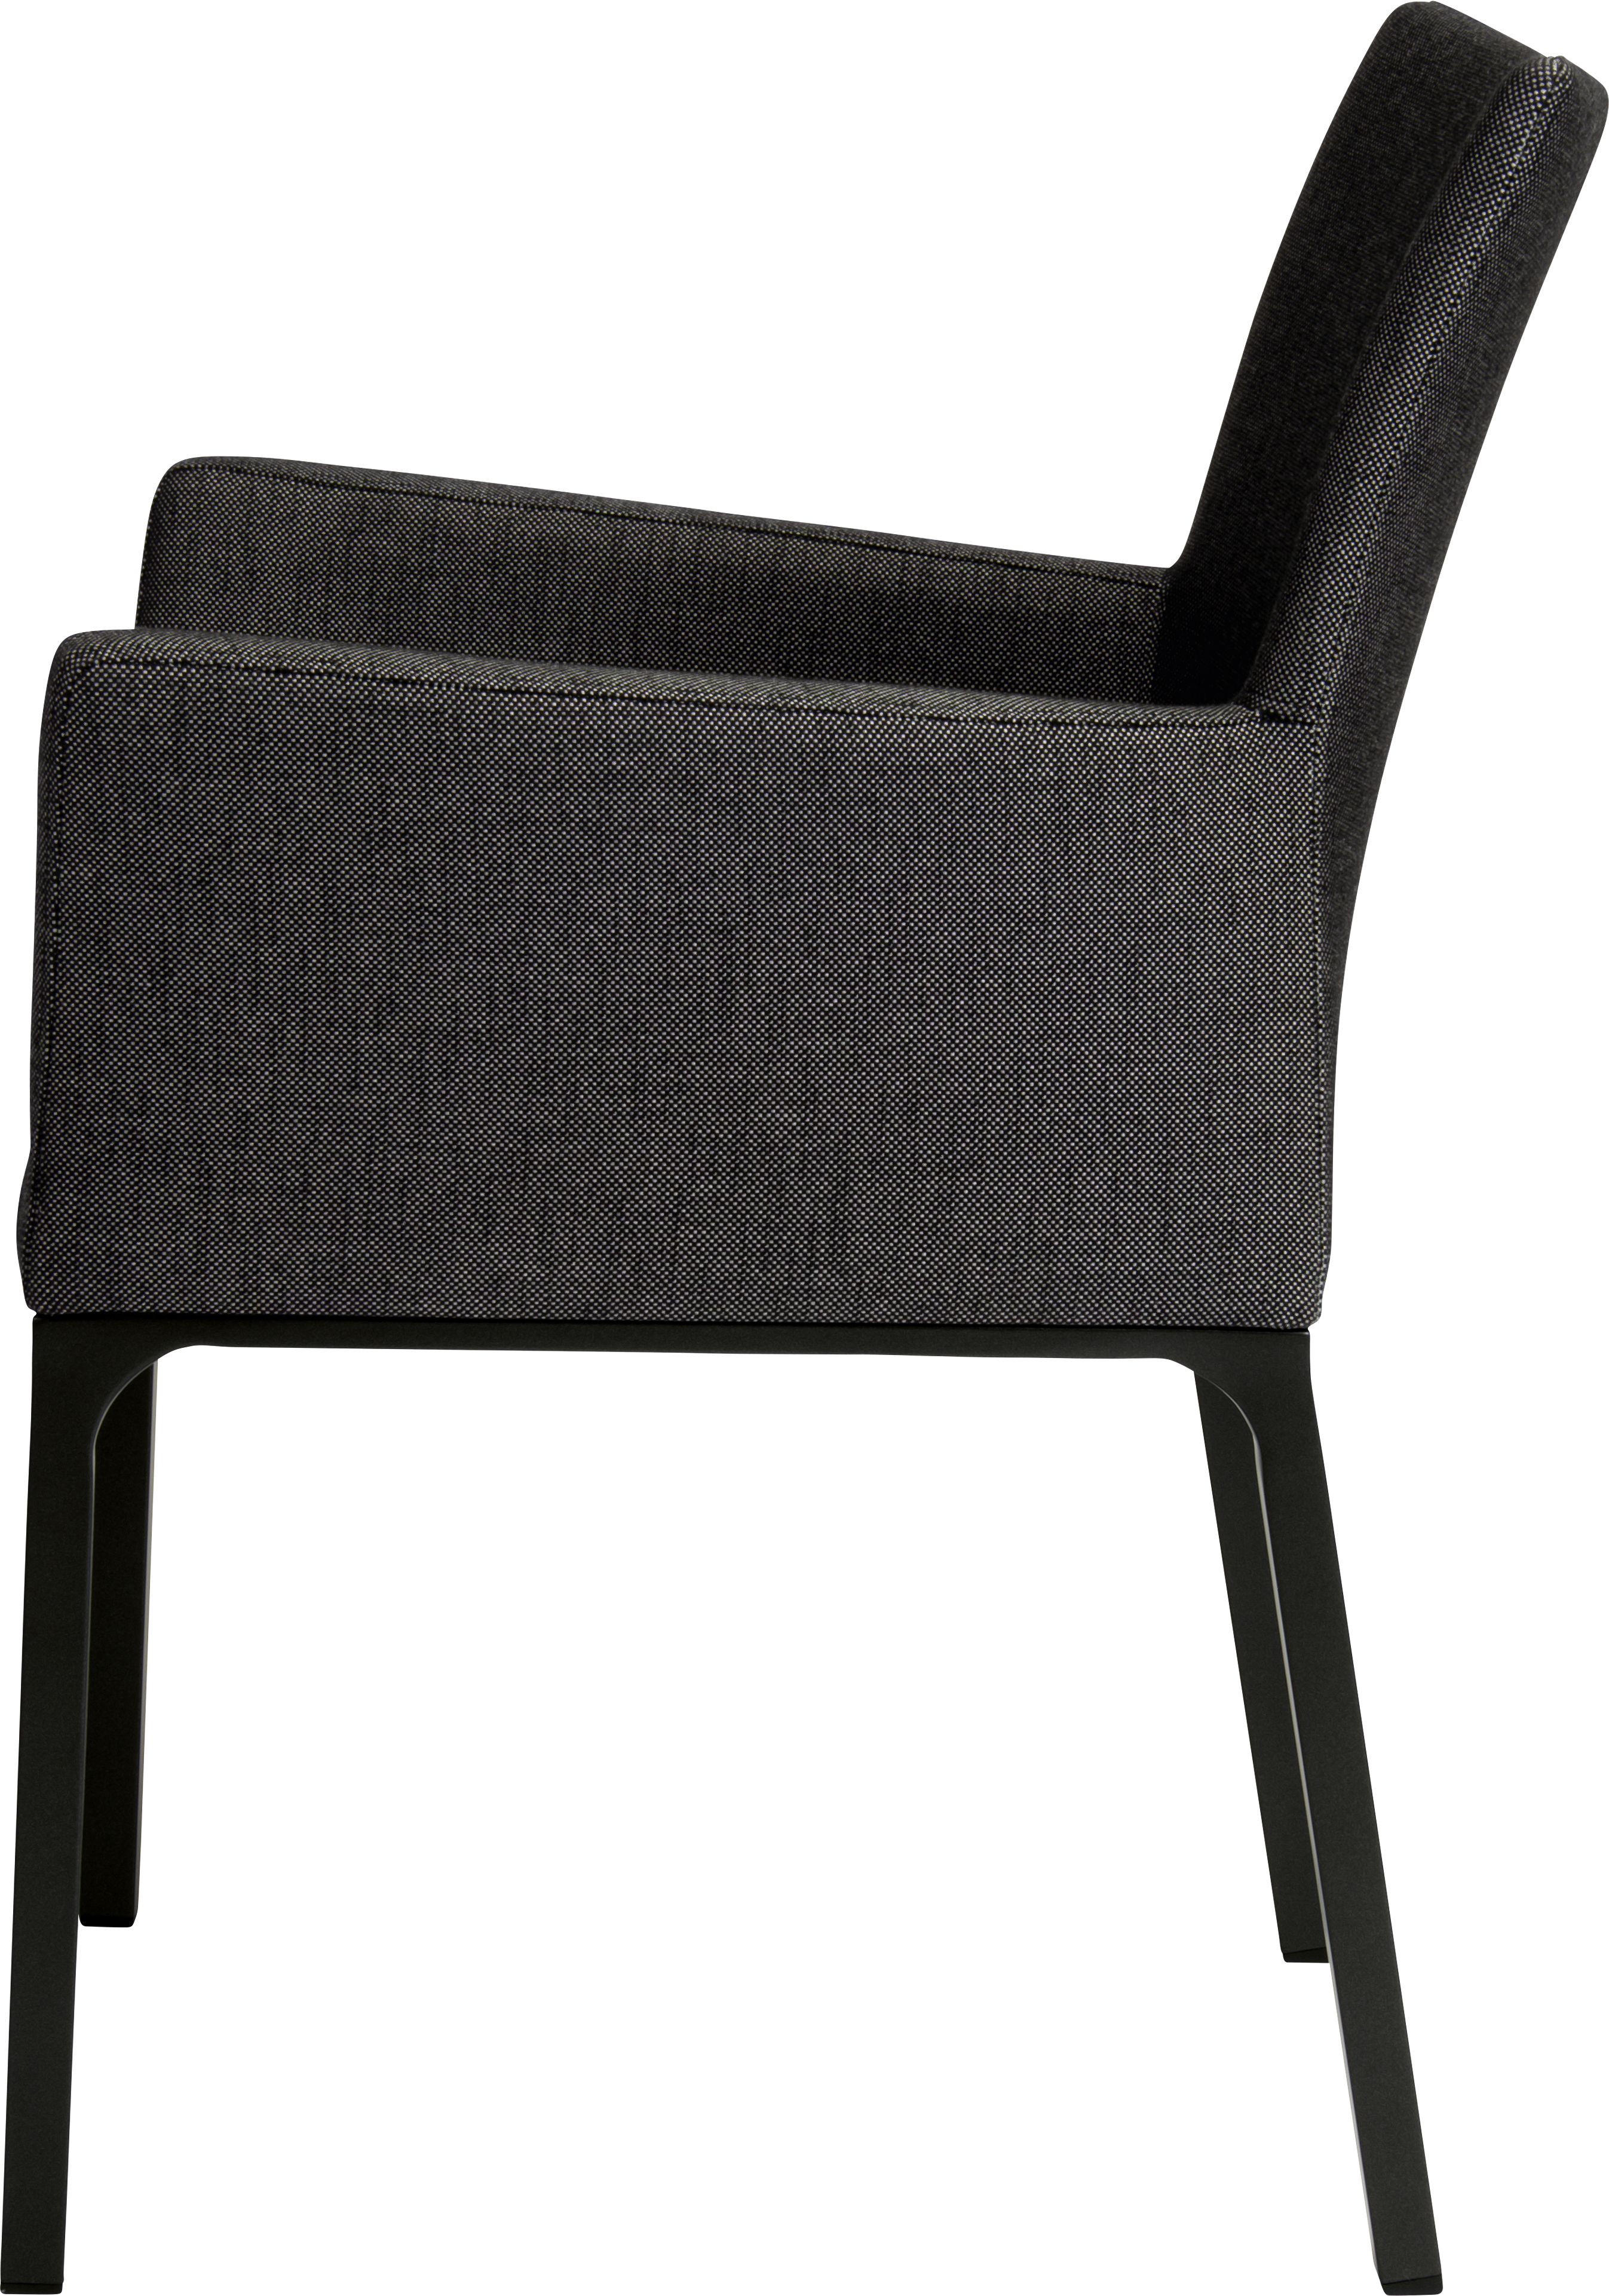 STERN Sessel ARTUS Aluminium schwarz matt Bezug Outdoorstoff seidenschwarz